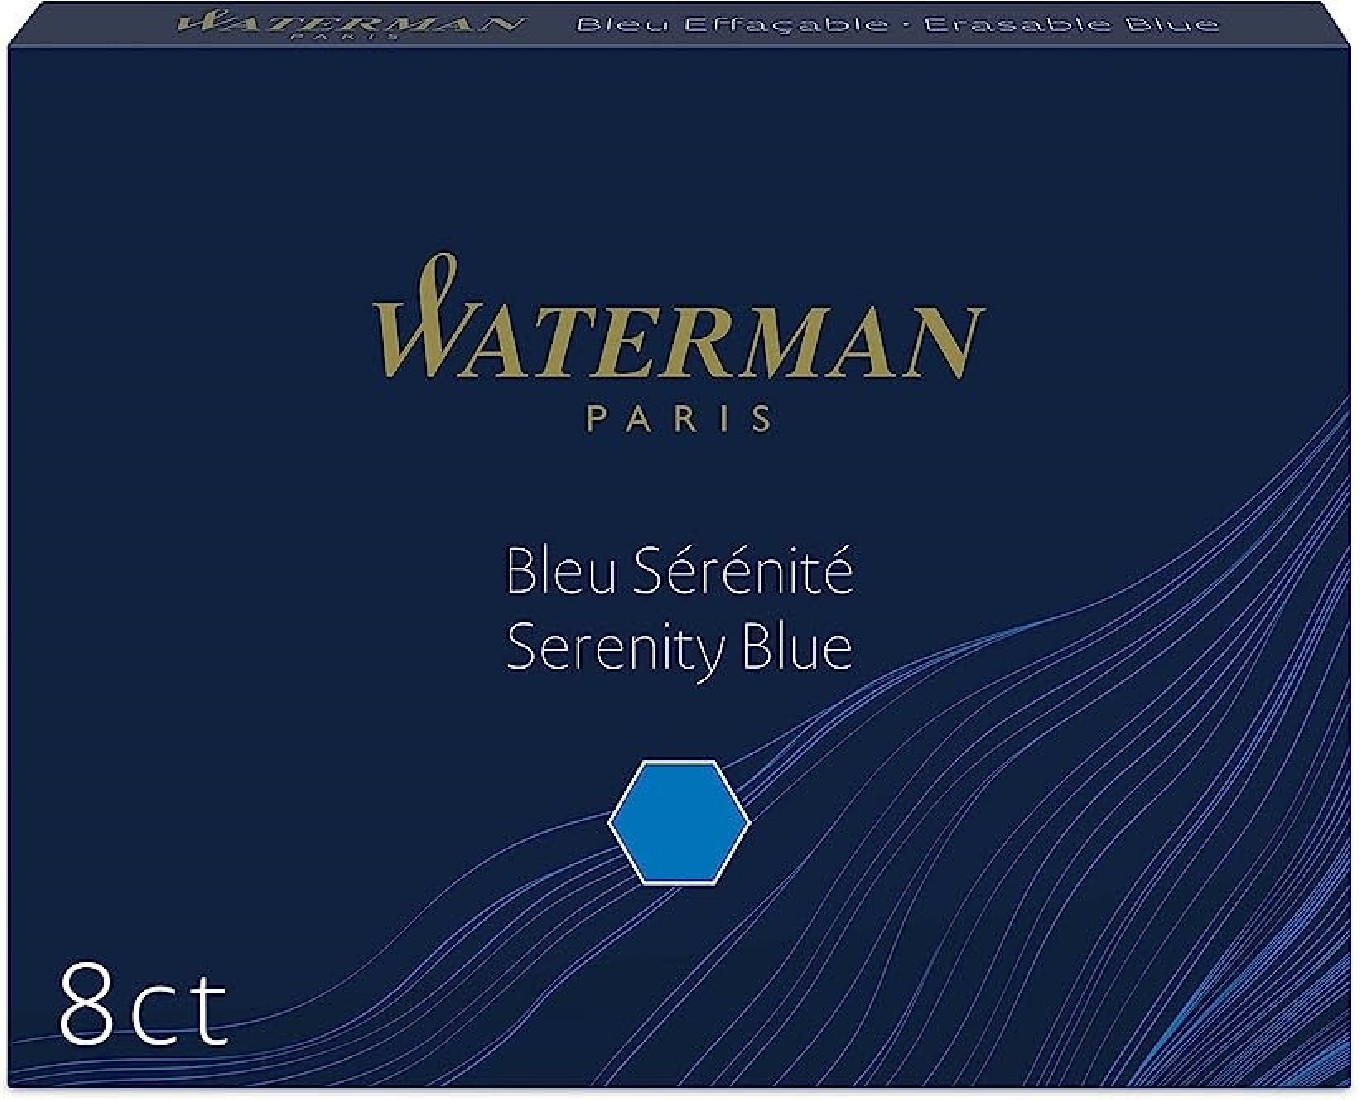 Waterman Ink Cartridges Blue 8pcs